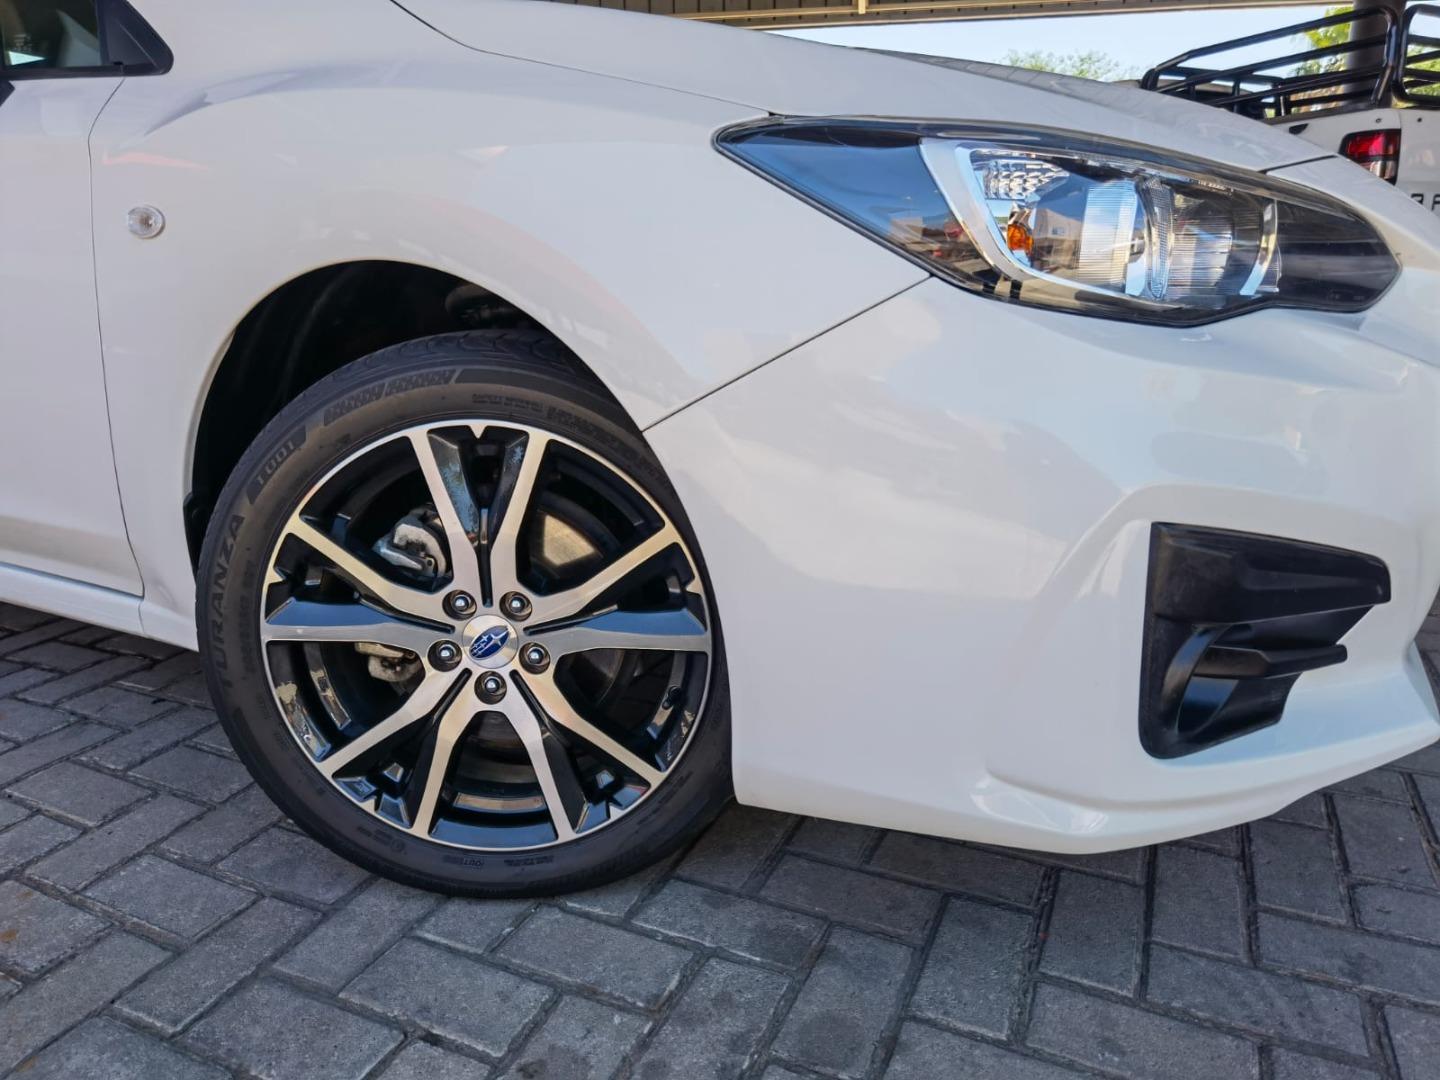 2019 Subaru Impreza wheel 